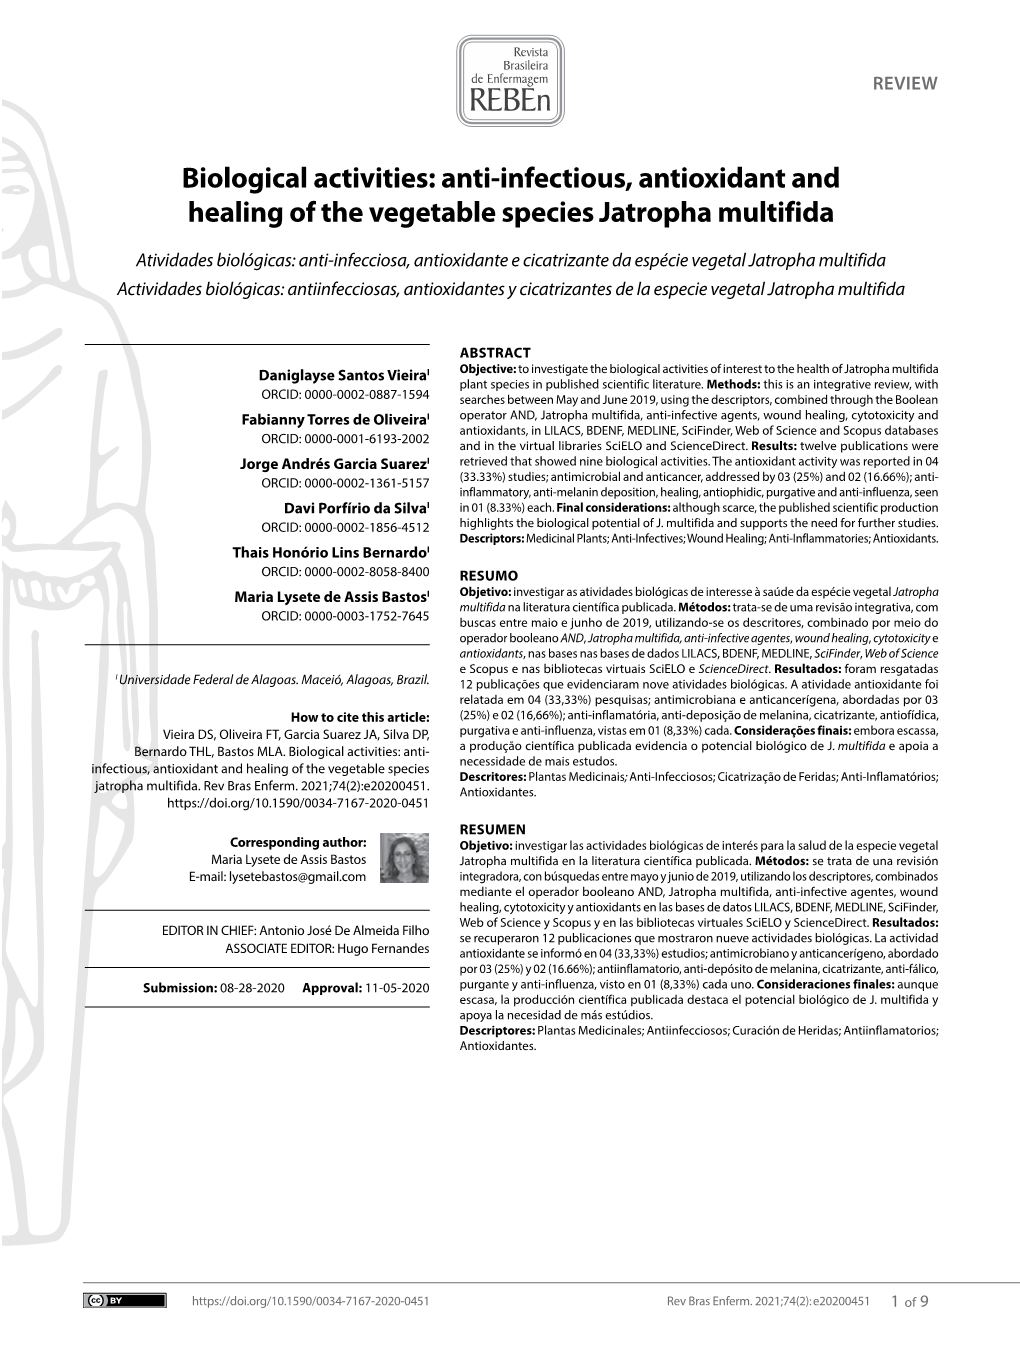 Biological Activities: Anti-Infectious, Antioxidant and Healing of the Vegetable Species Jatropha Multifida